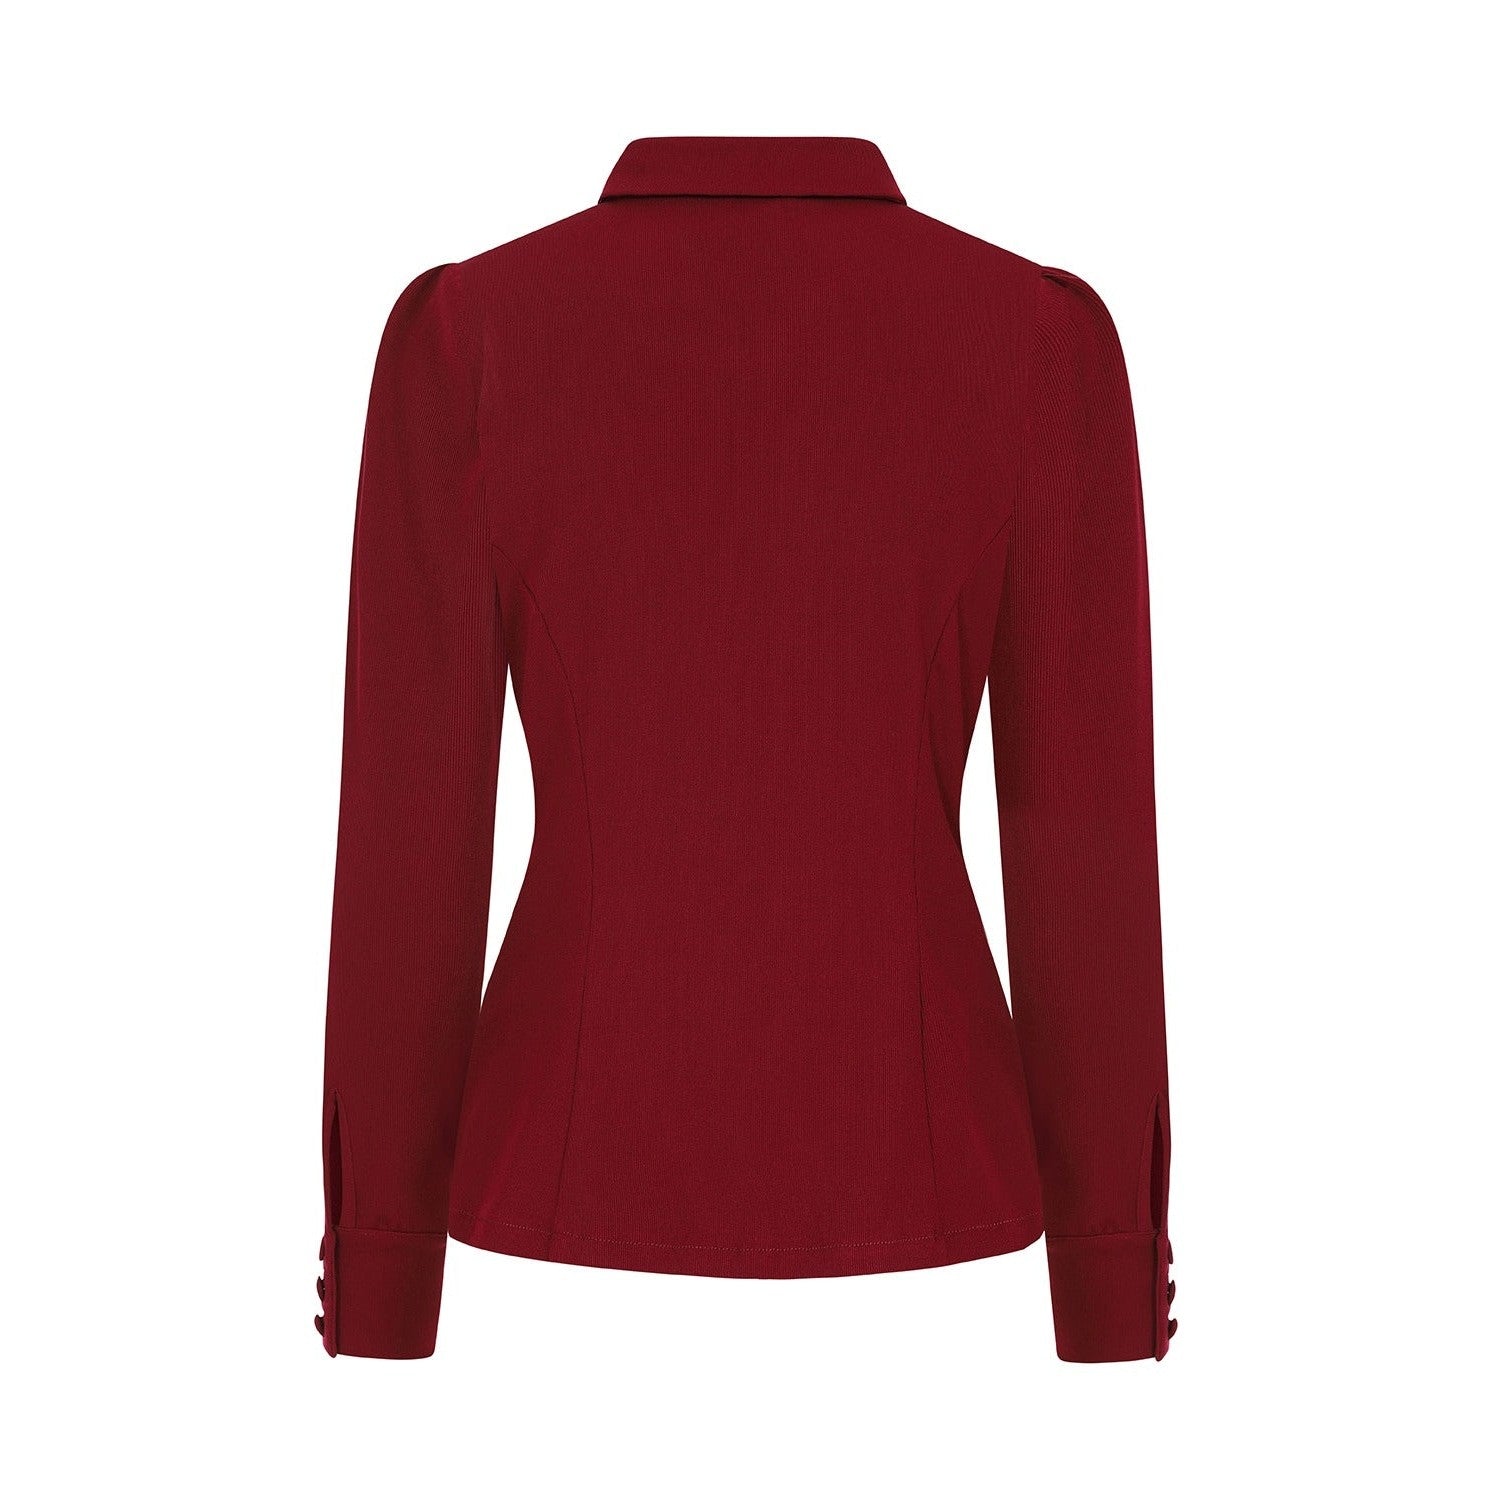 Burgundy Red Long Sleeve Shirt Top